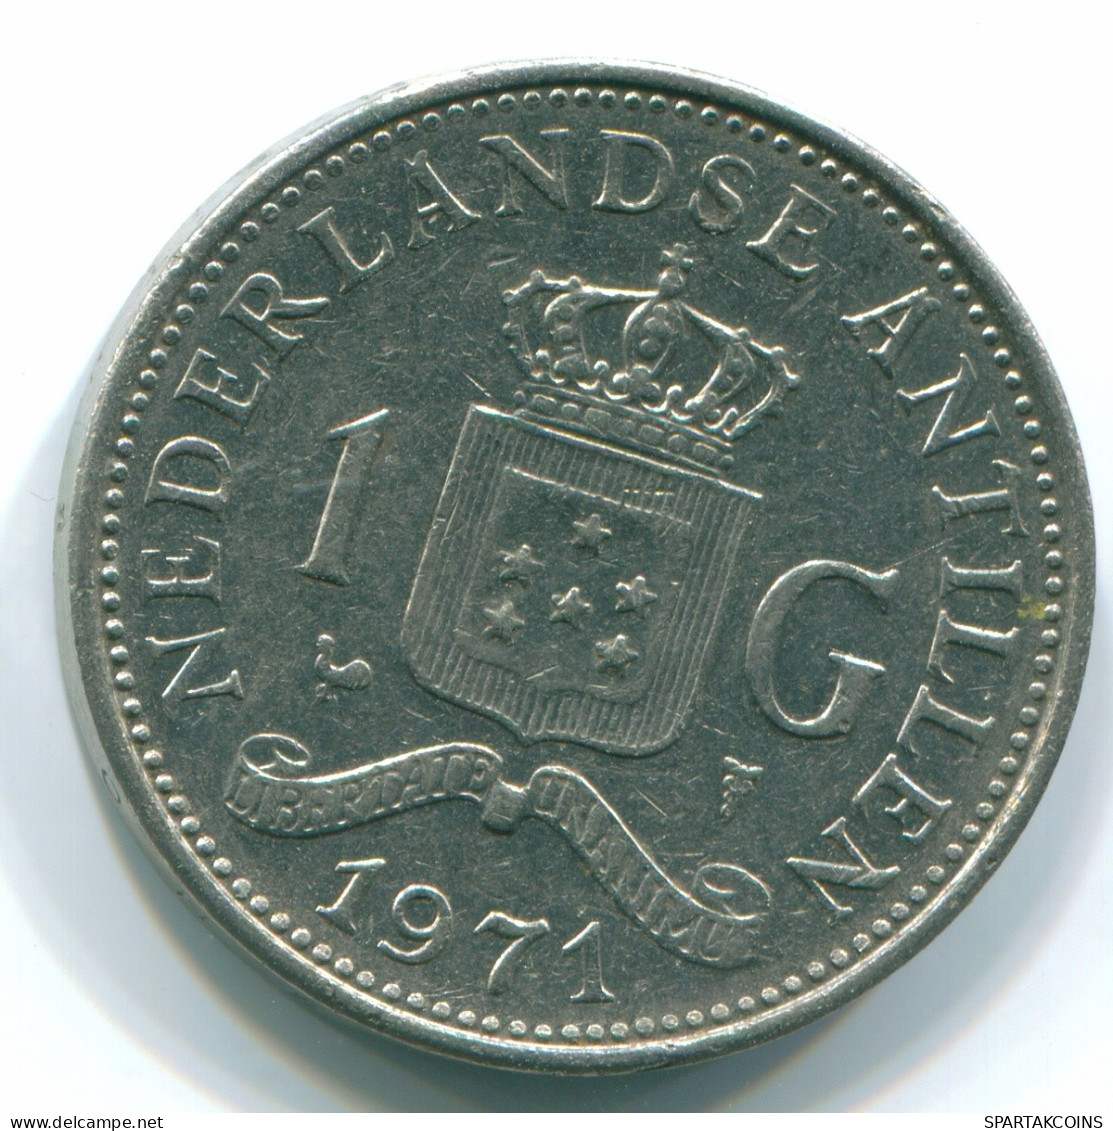 1 GULDEN 1971 NETHERLANDS ANTILLES Nickel Colonial Coin #S11955.U.A - Antilles Néerlandaises